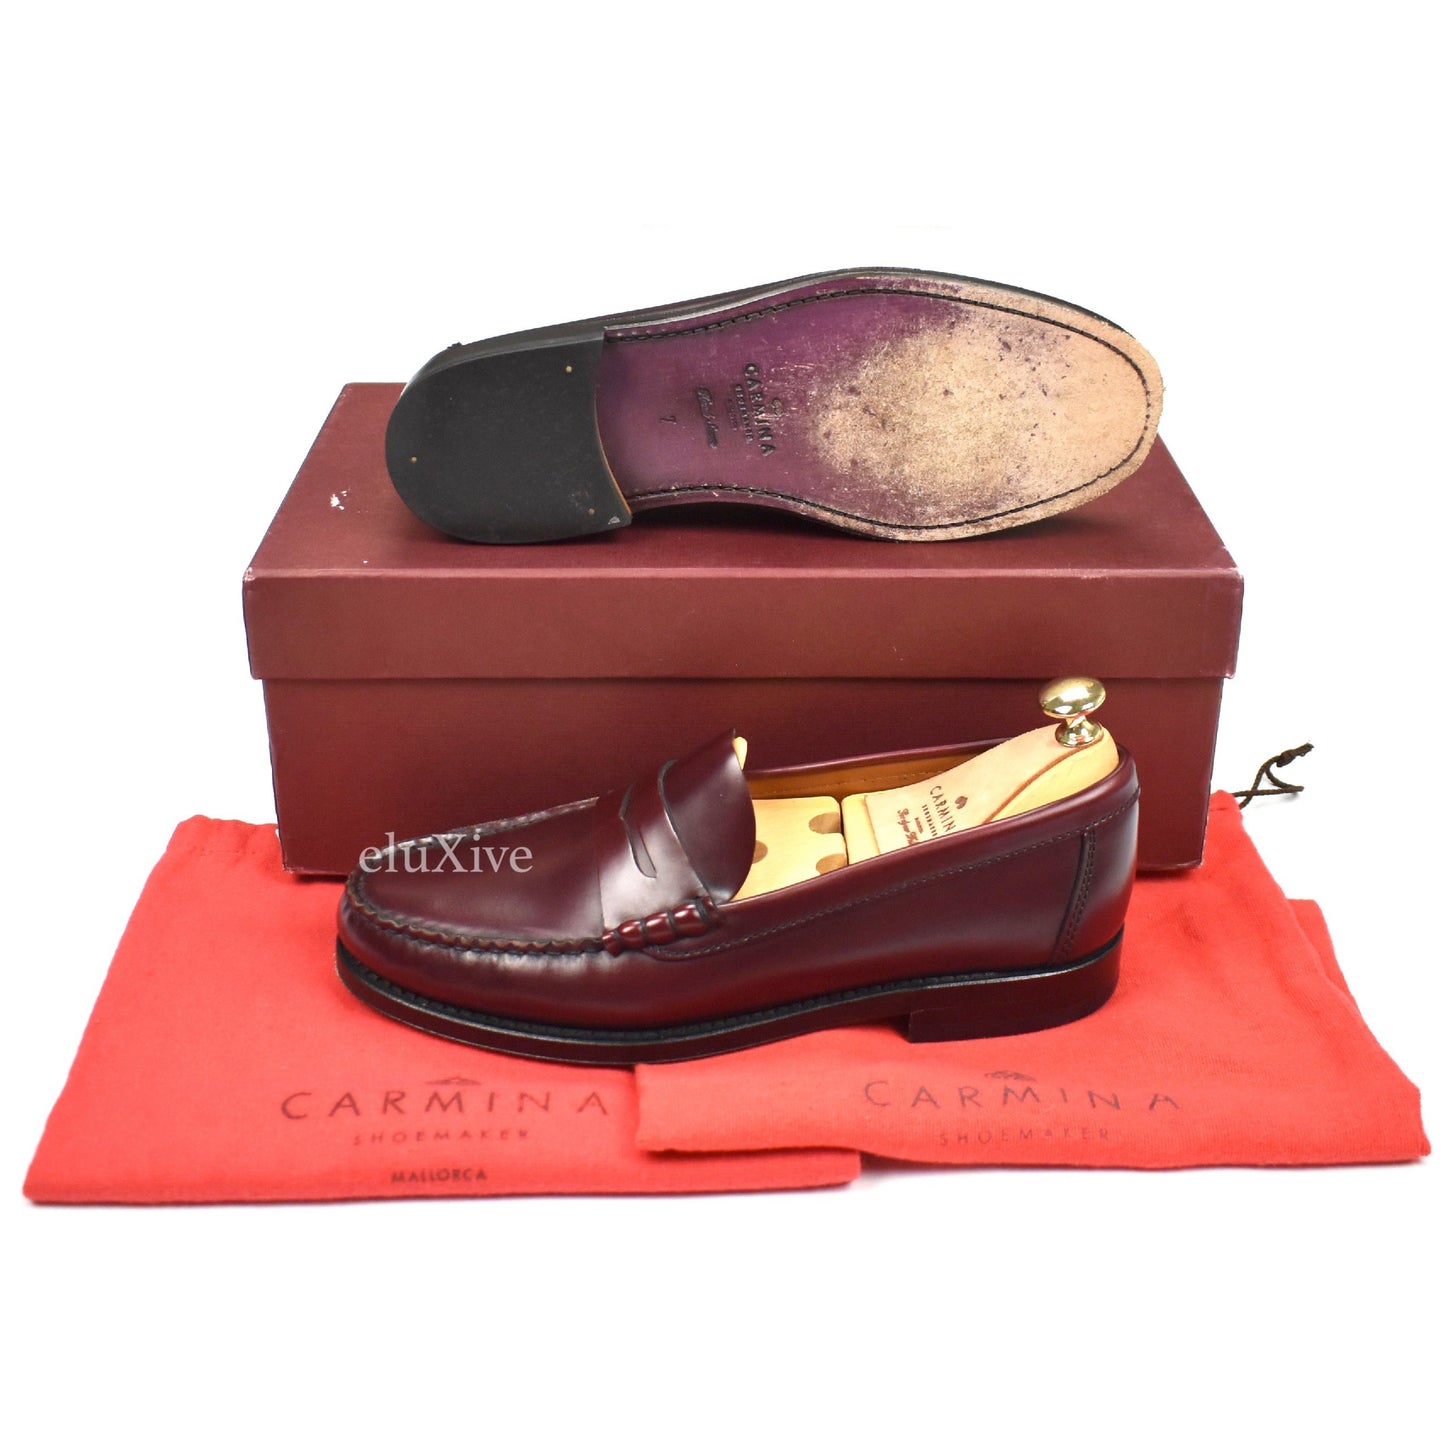 Carmina - Oxblood Leather Penny Loafers